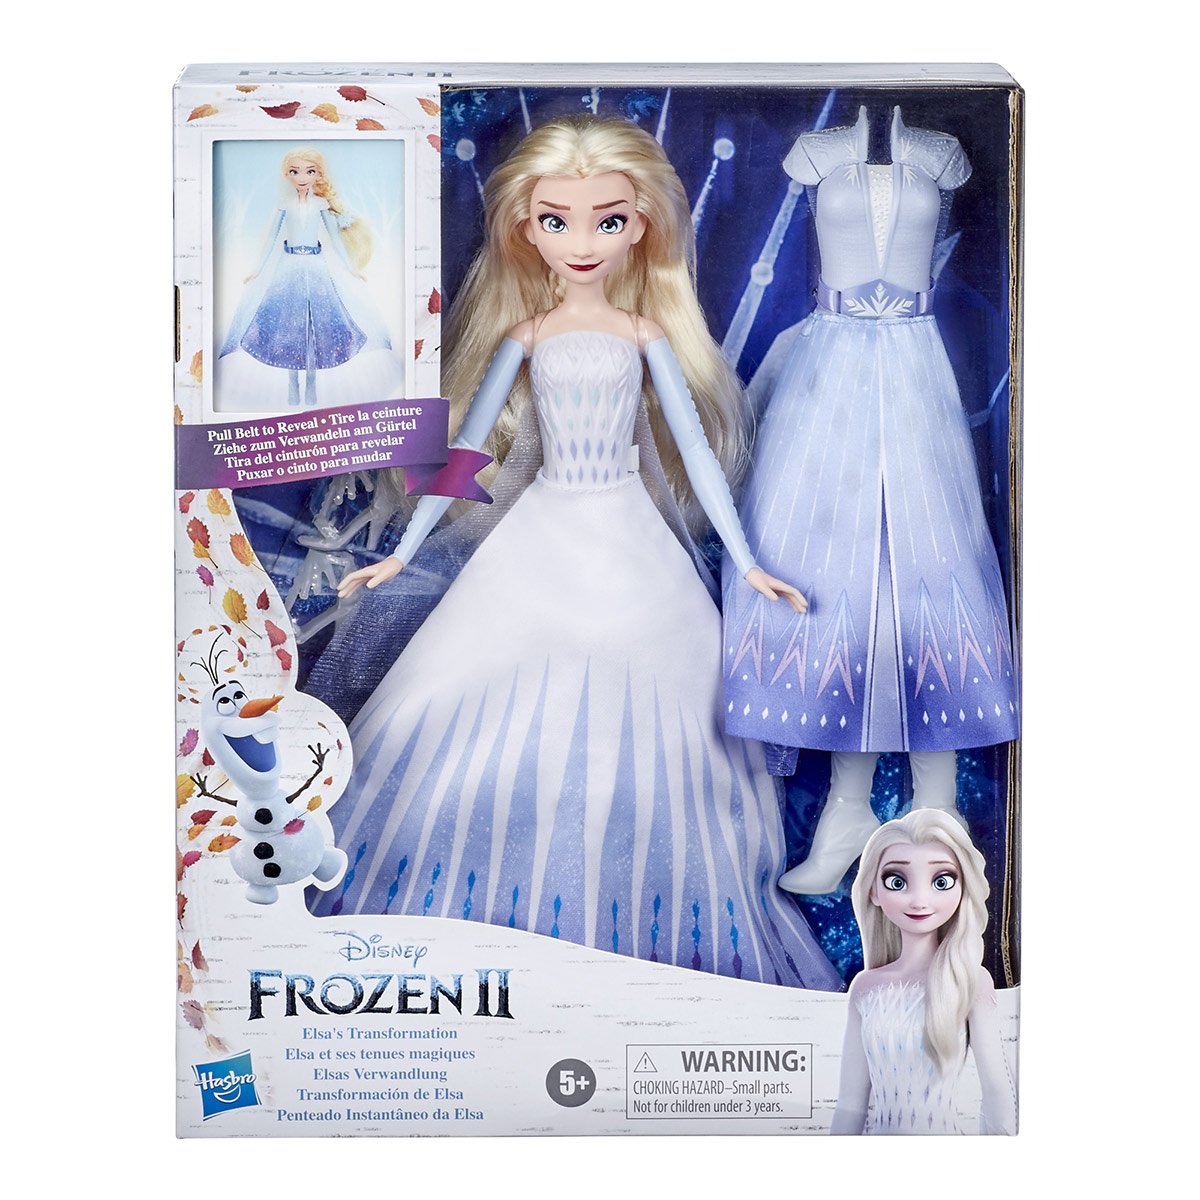 Elsa dans La Reine des Neiges - Terrafemina